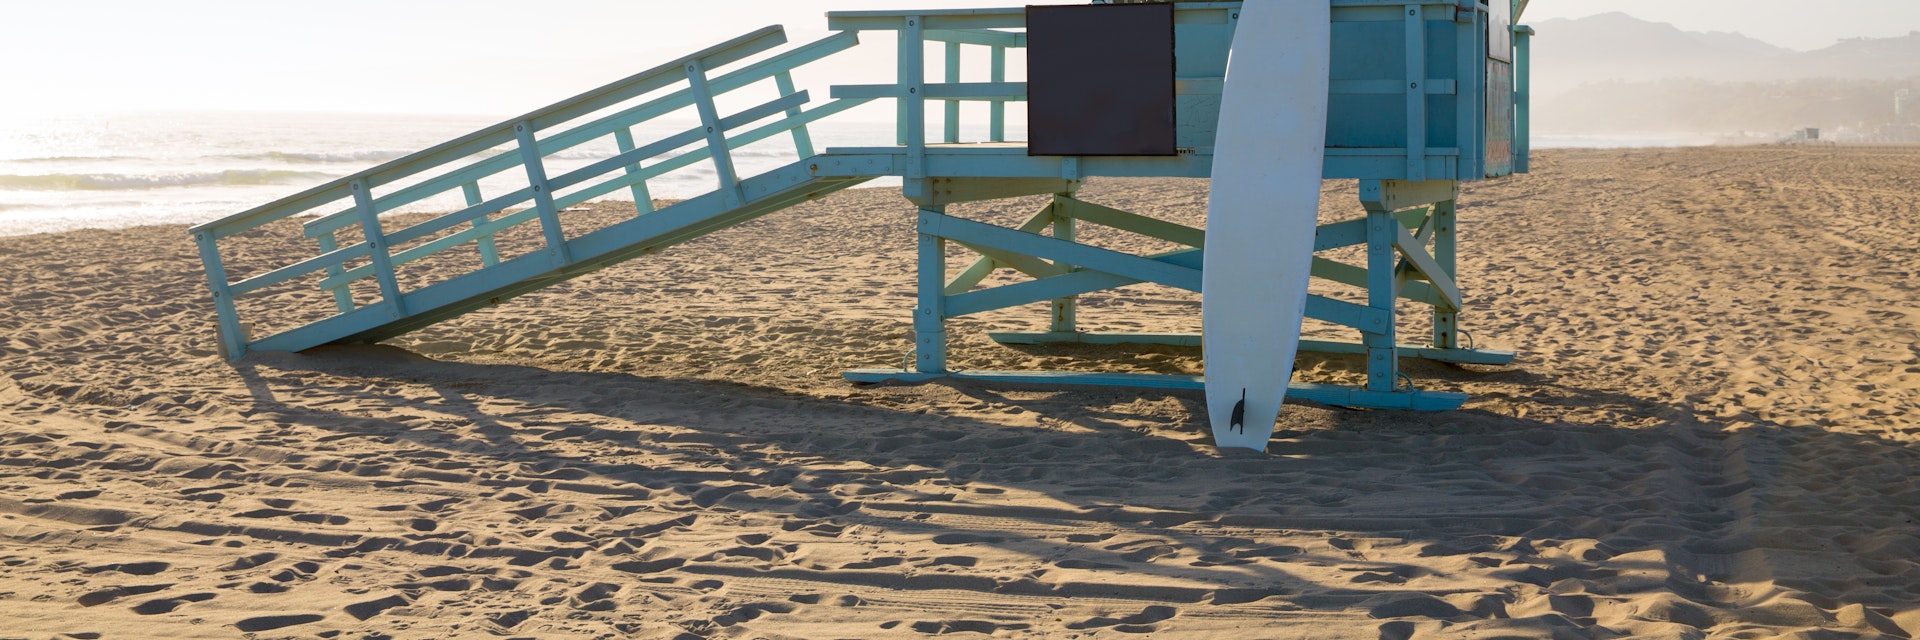 Santa Monica beach lifeguard tower in California USA.